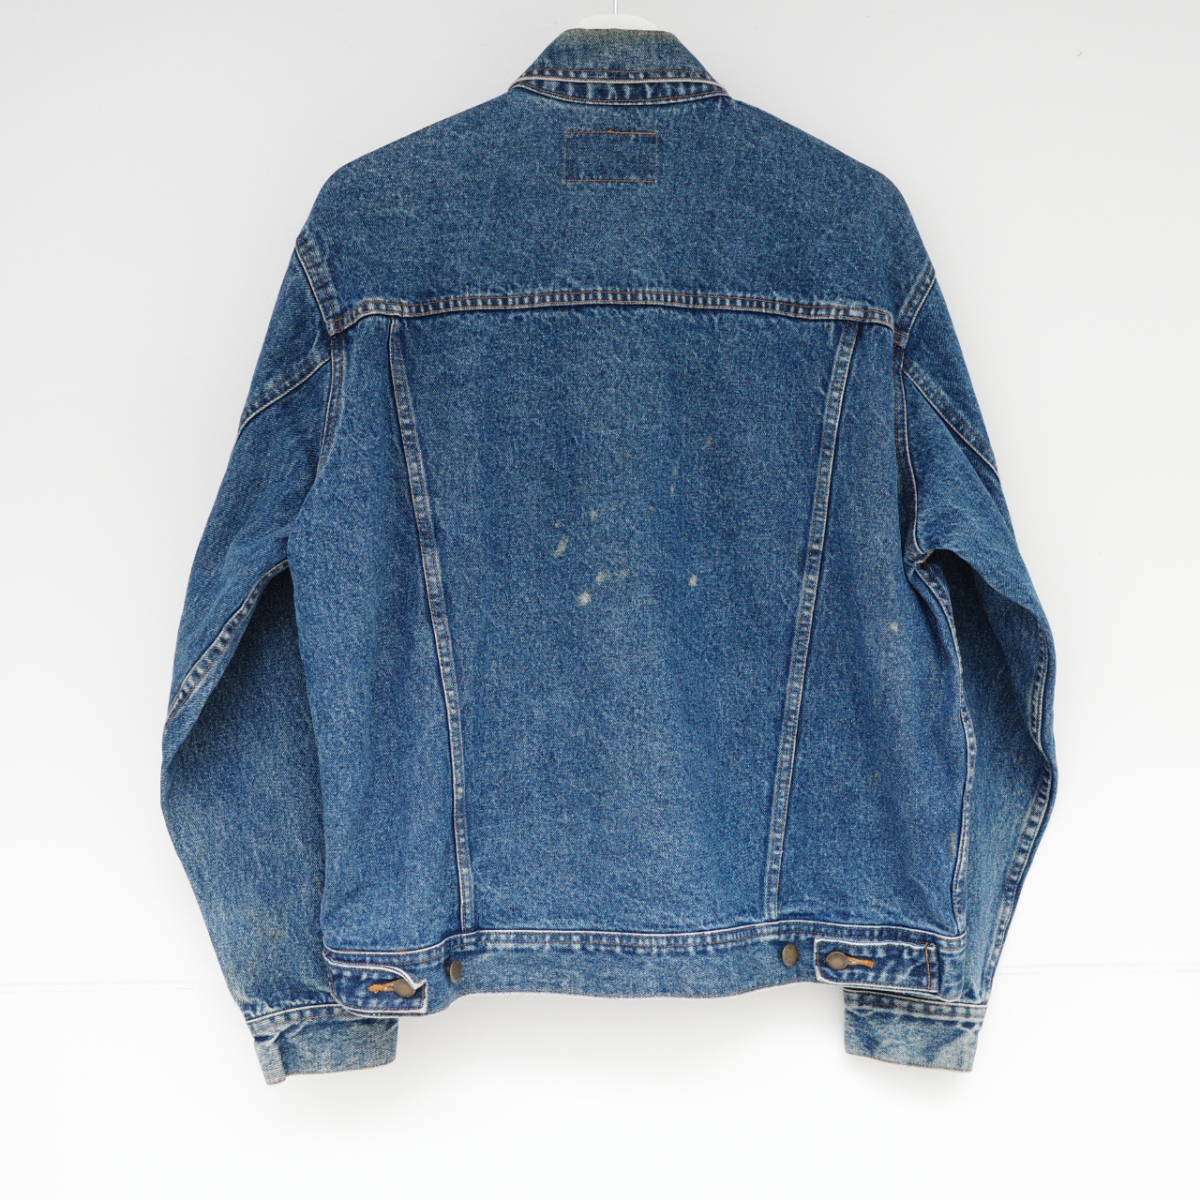 90s vintage Wrangler Denim жакет Wrangler RUGGED WEAR Denim jacket